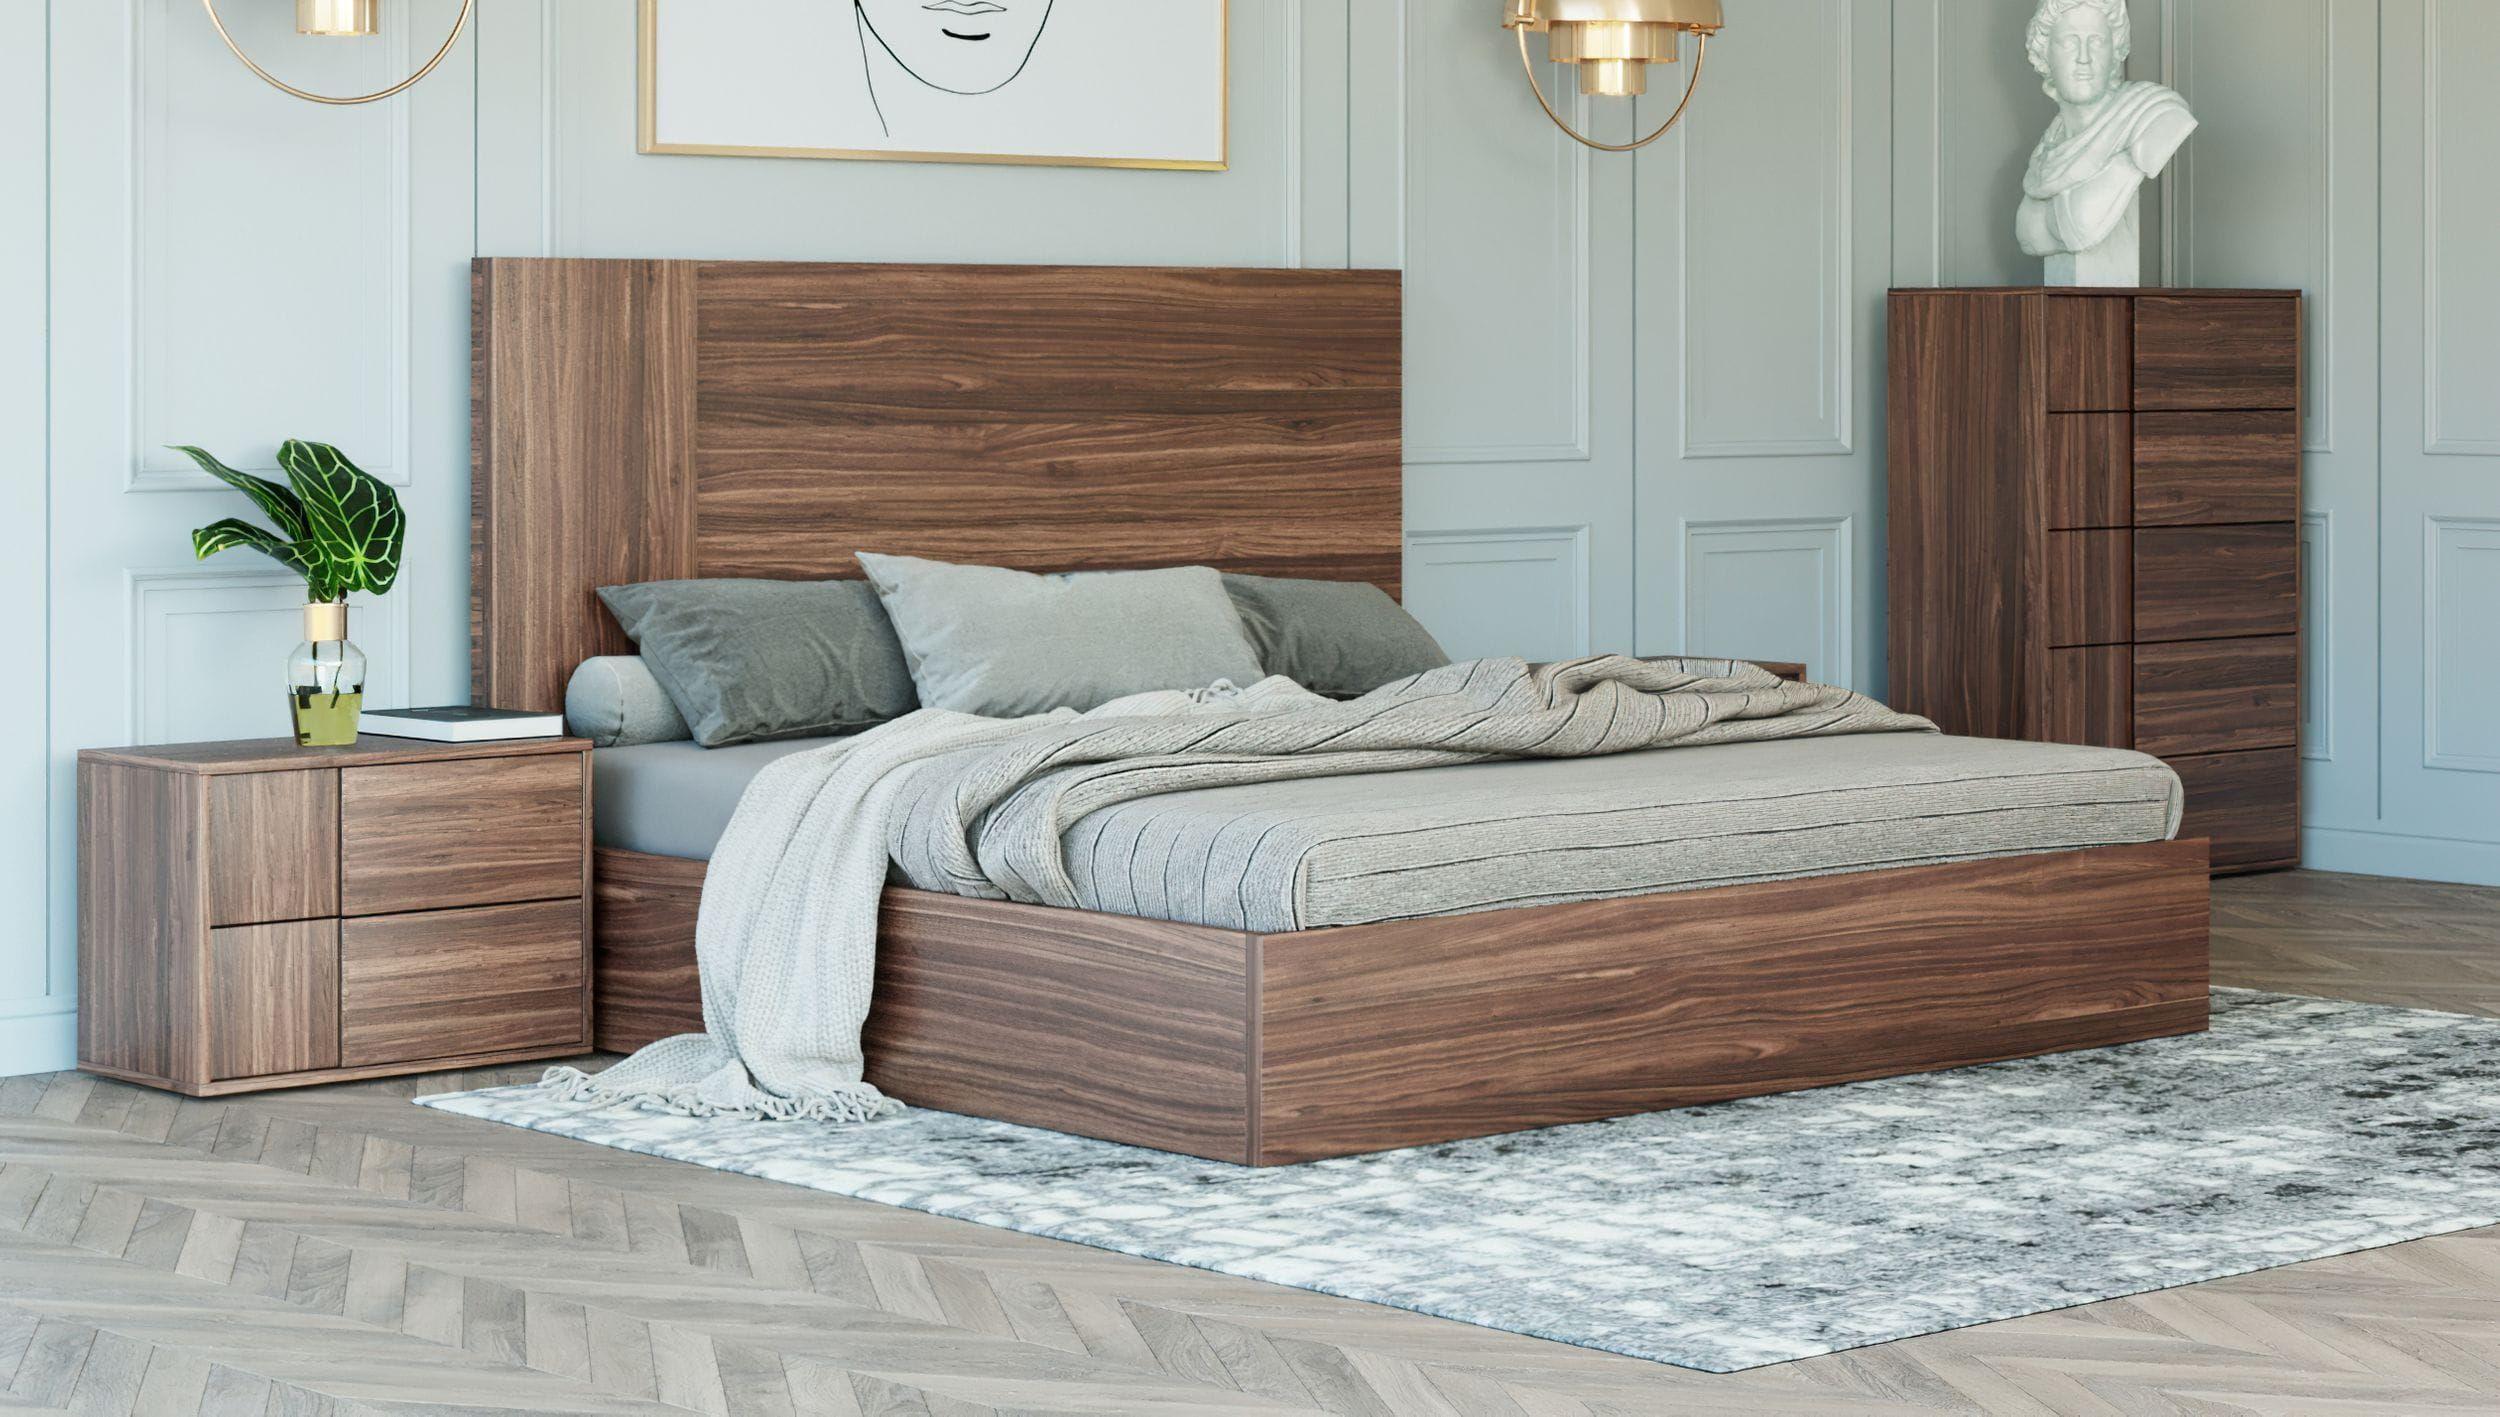 

    
Walnut Queen Size Panel Bed by VIG Nova Domus Asus
